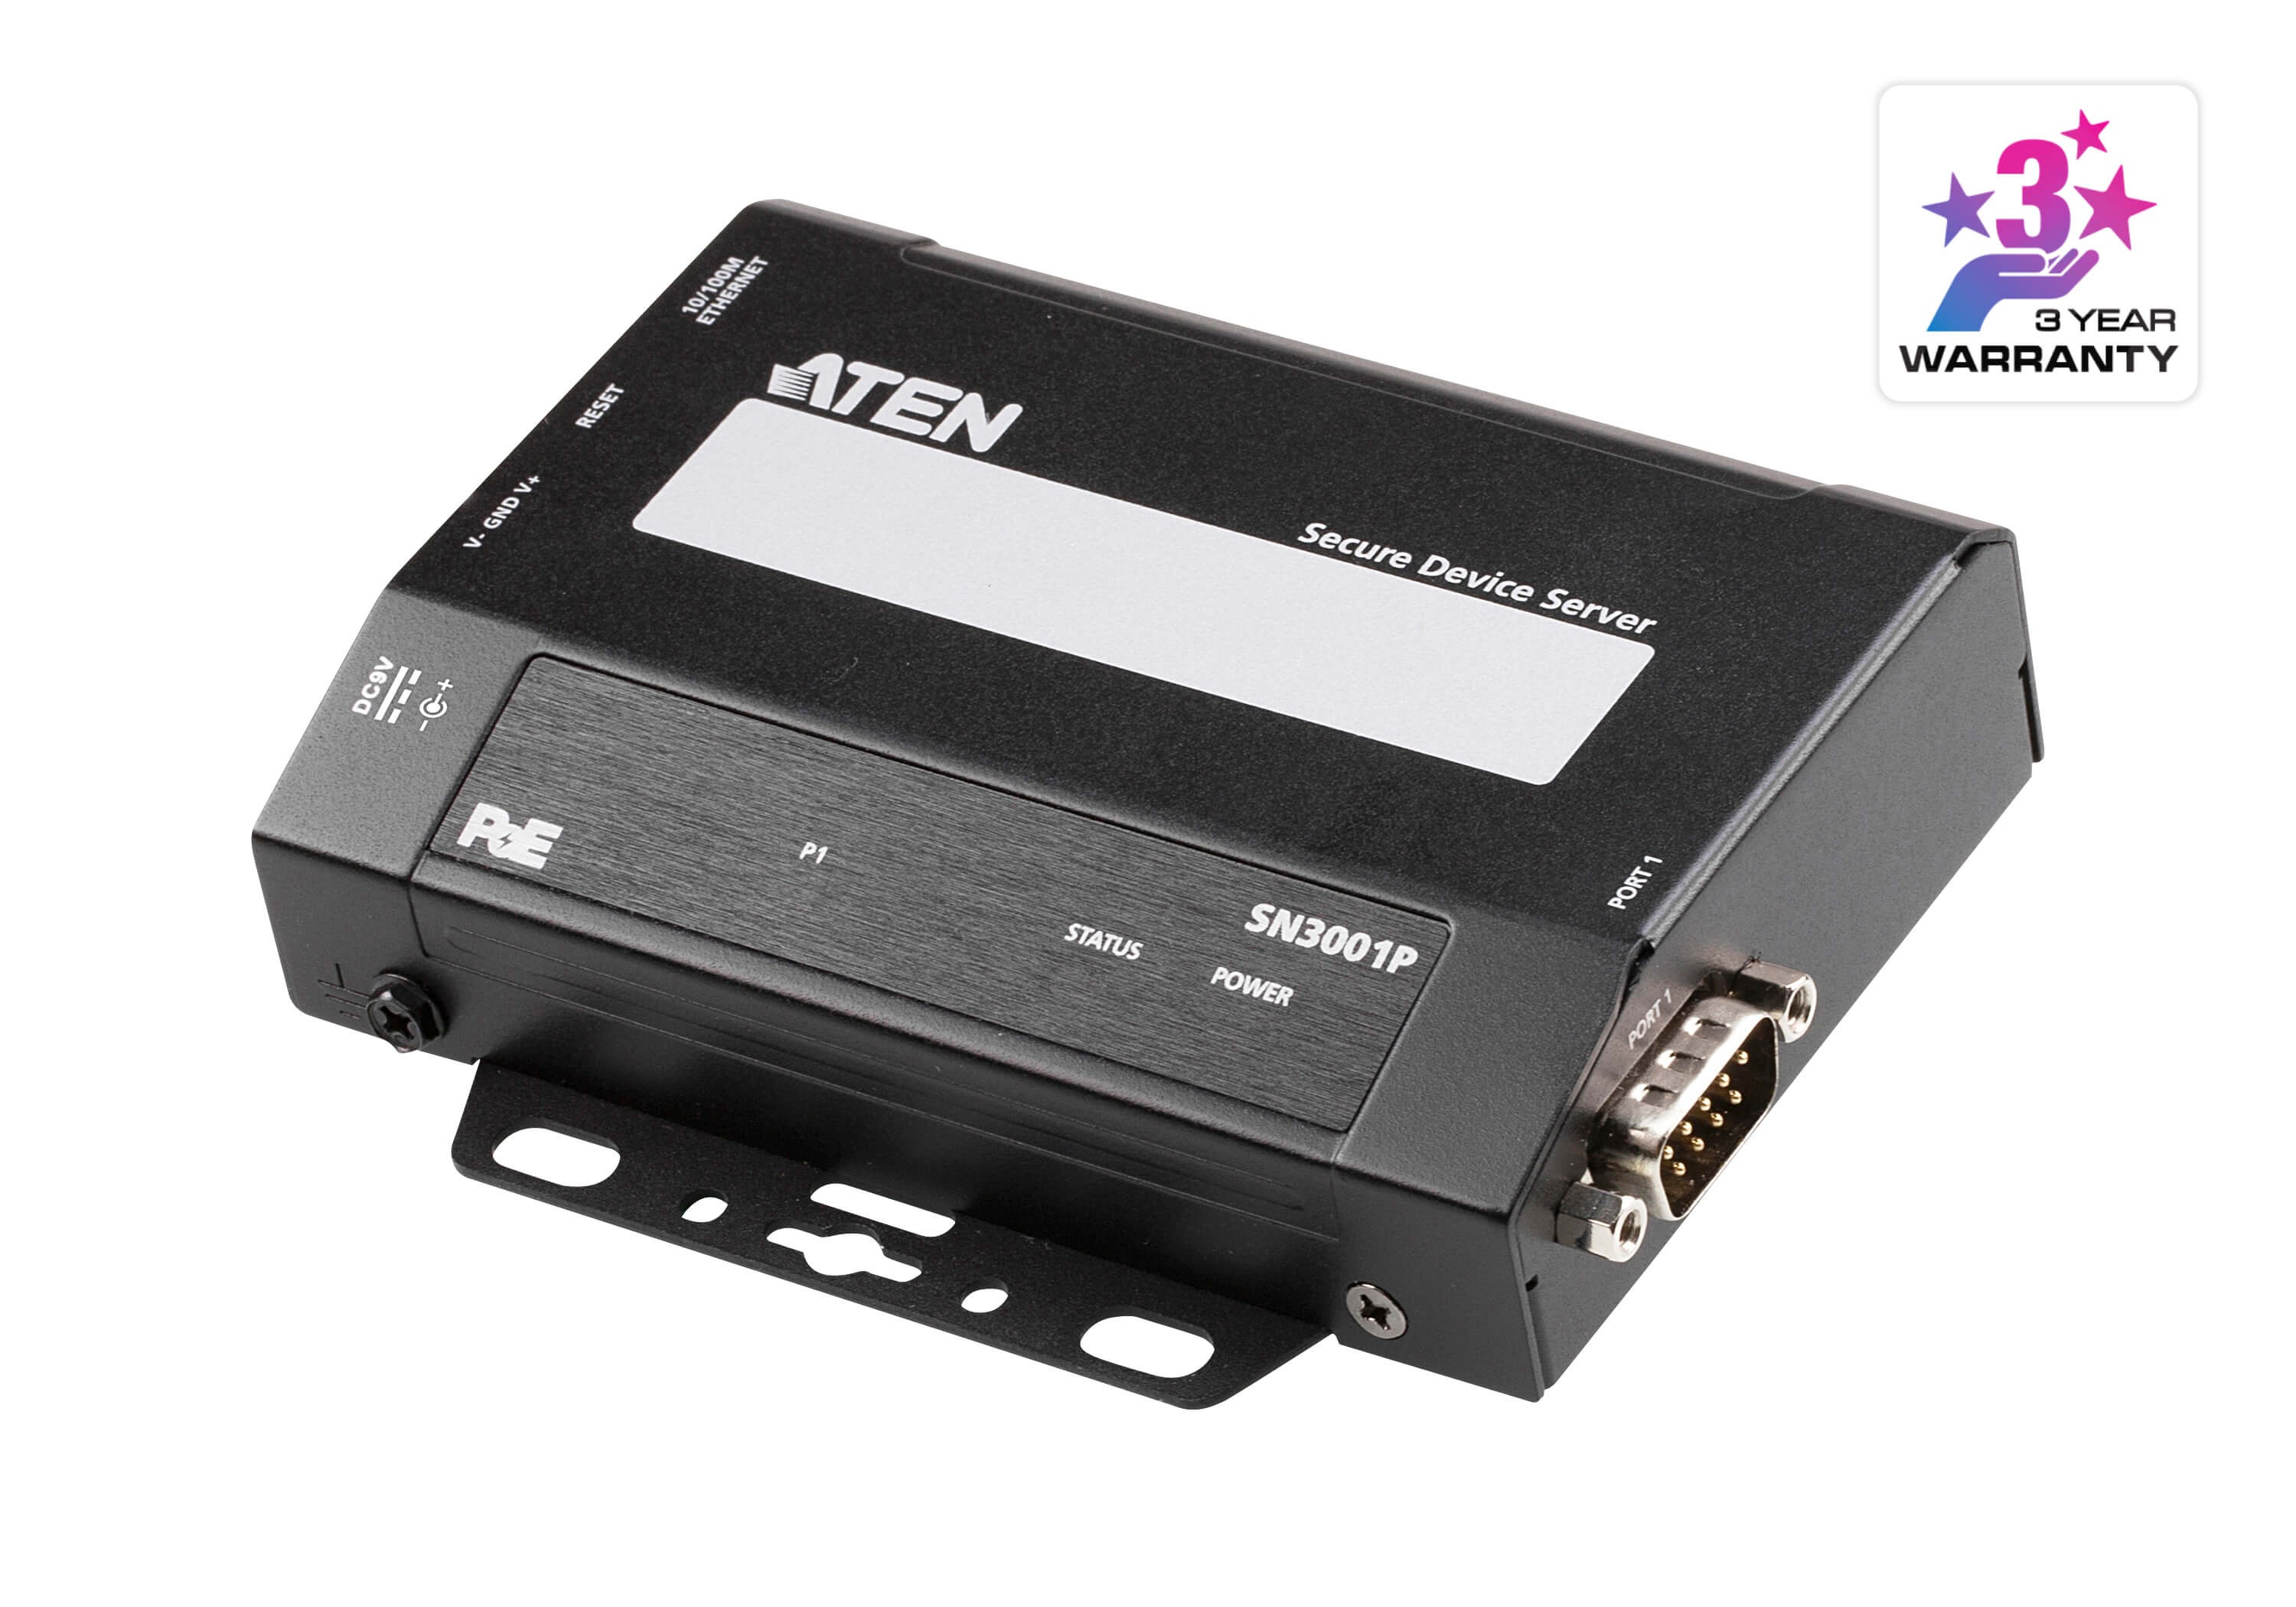 SN3001P  1-Port RS-232 Secure Device Server over Ethernet Transmission with PoE